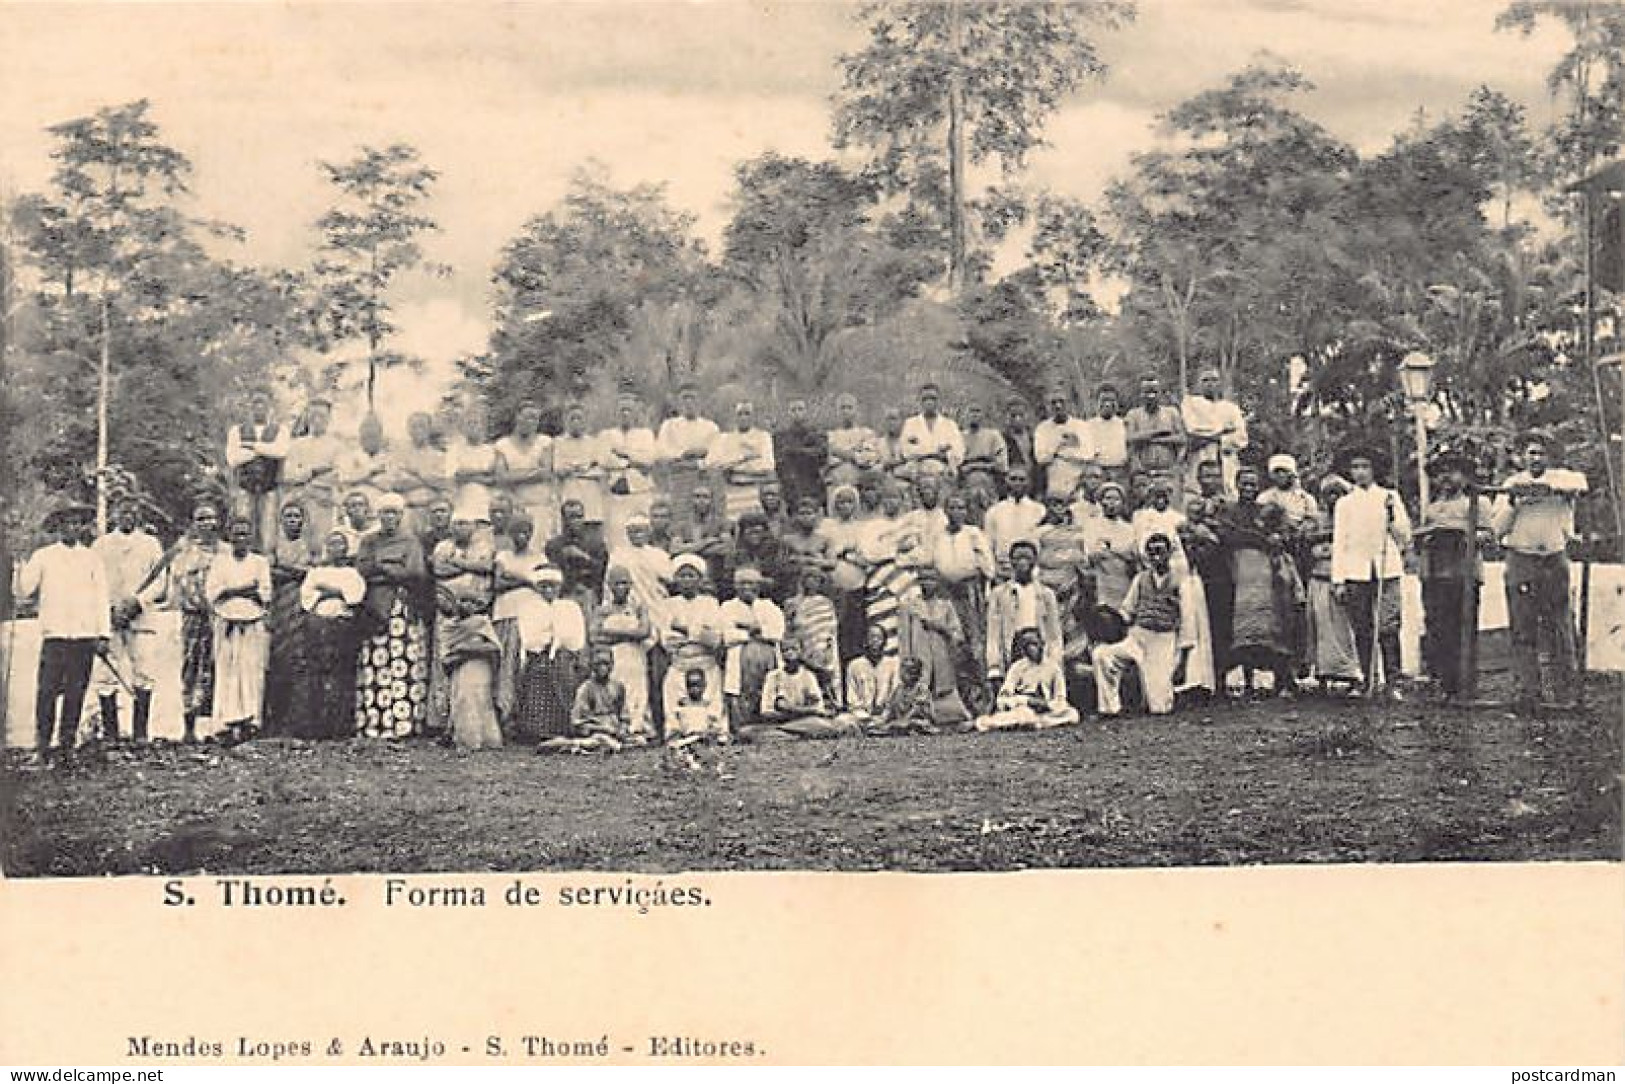 SAO TOME - Servants - Publ. Mendes. - São Tomé Und Príncipe